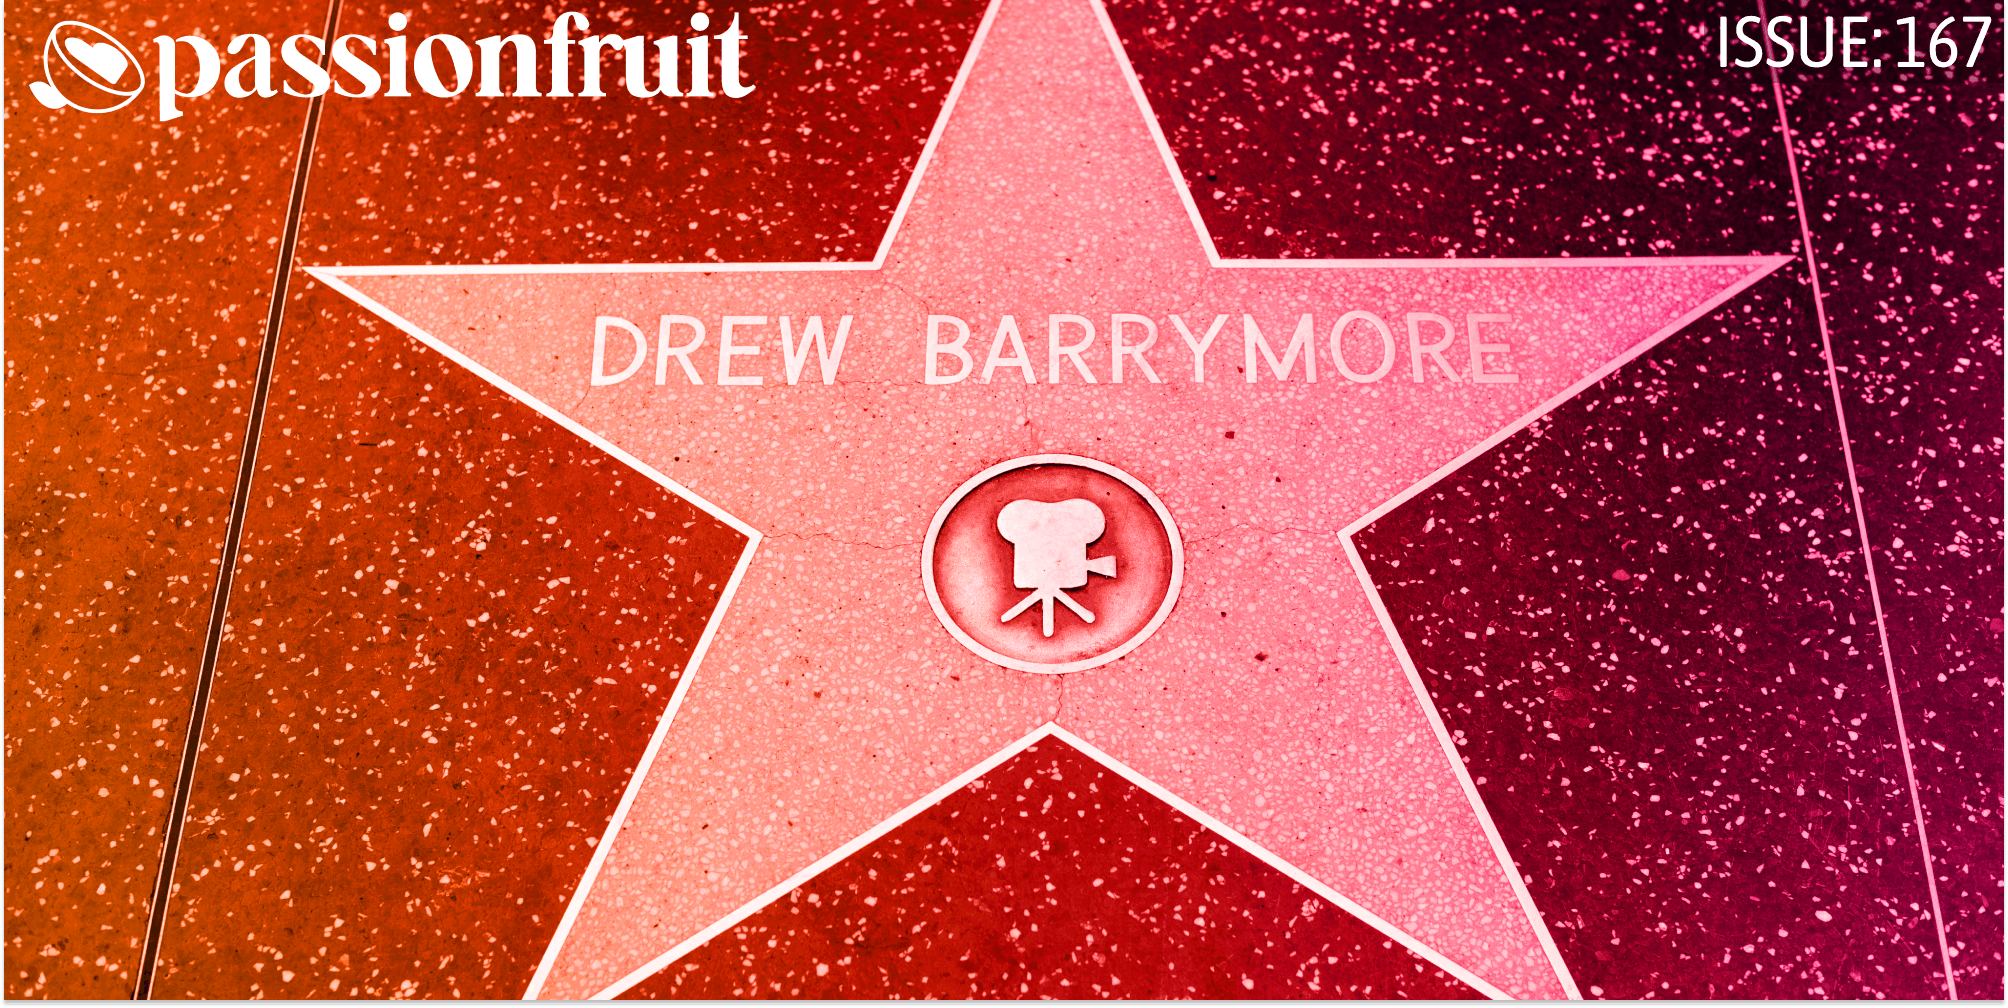 RIP My Idolization of Drew Barrymore